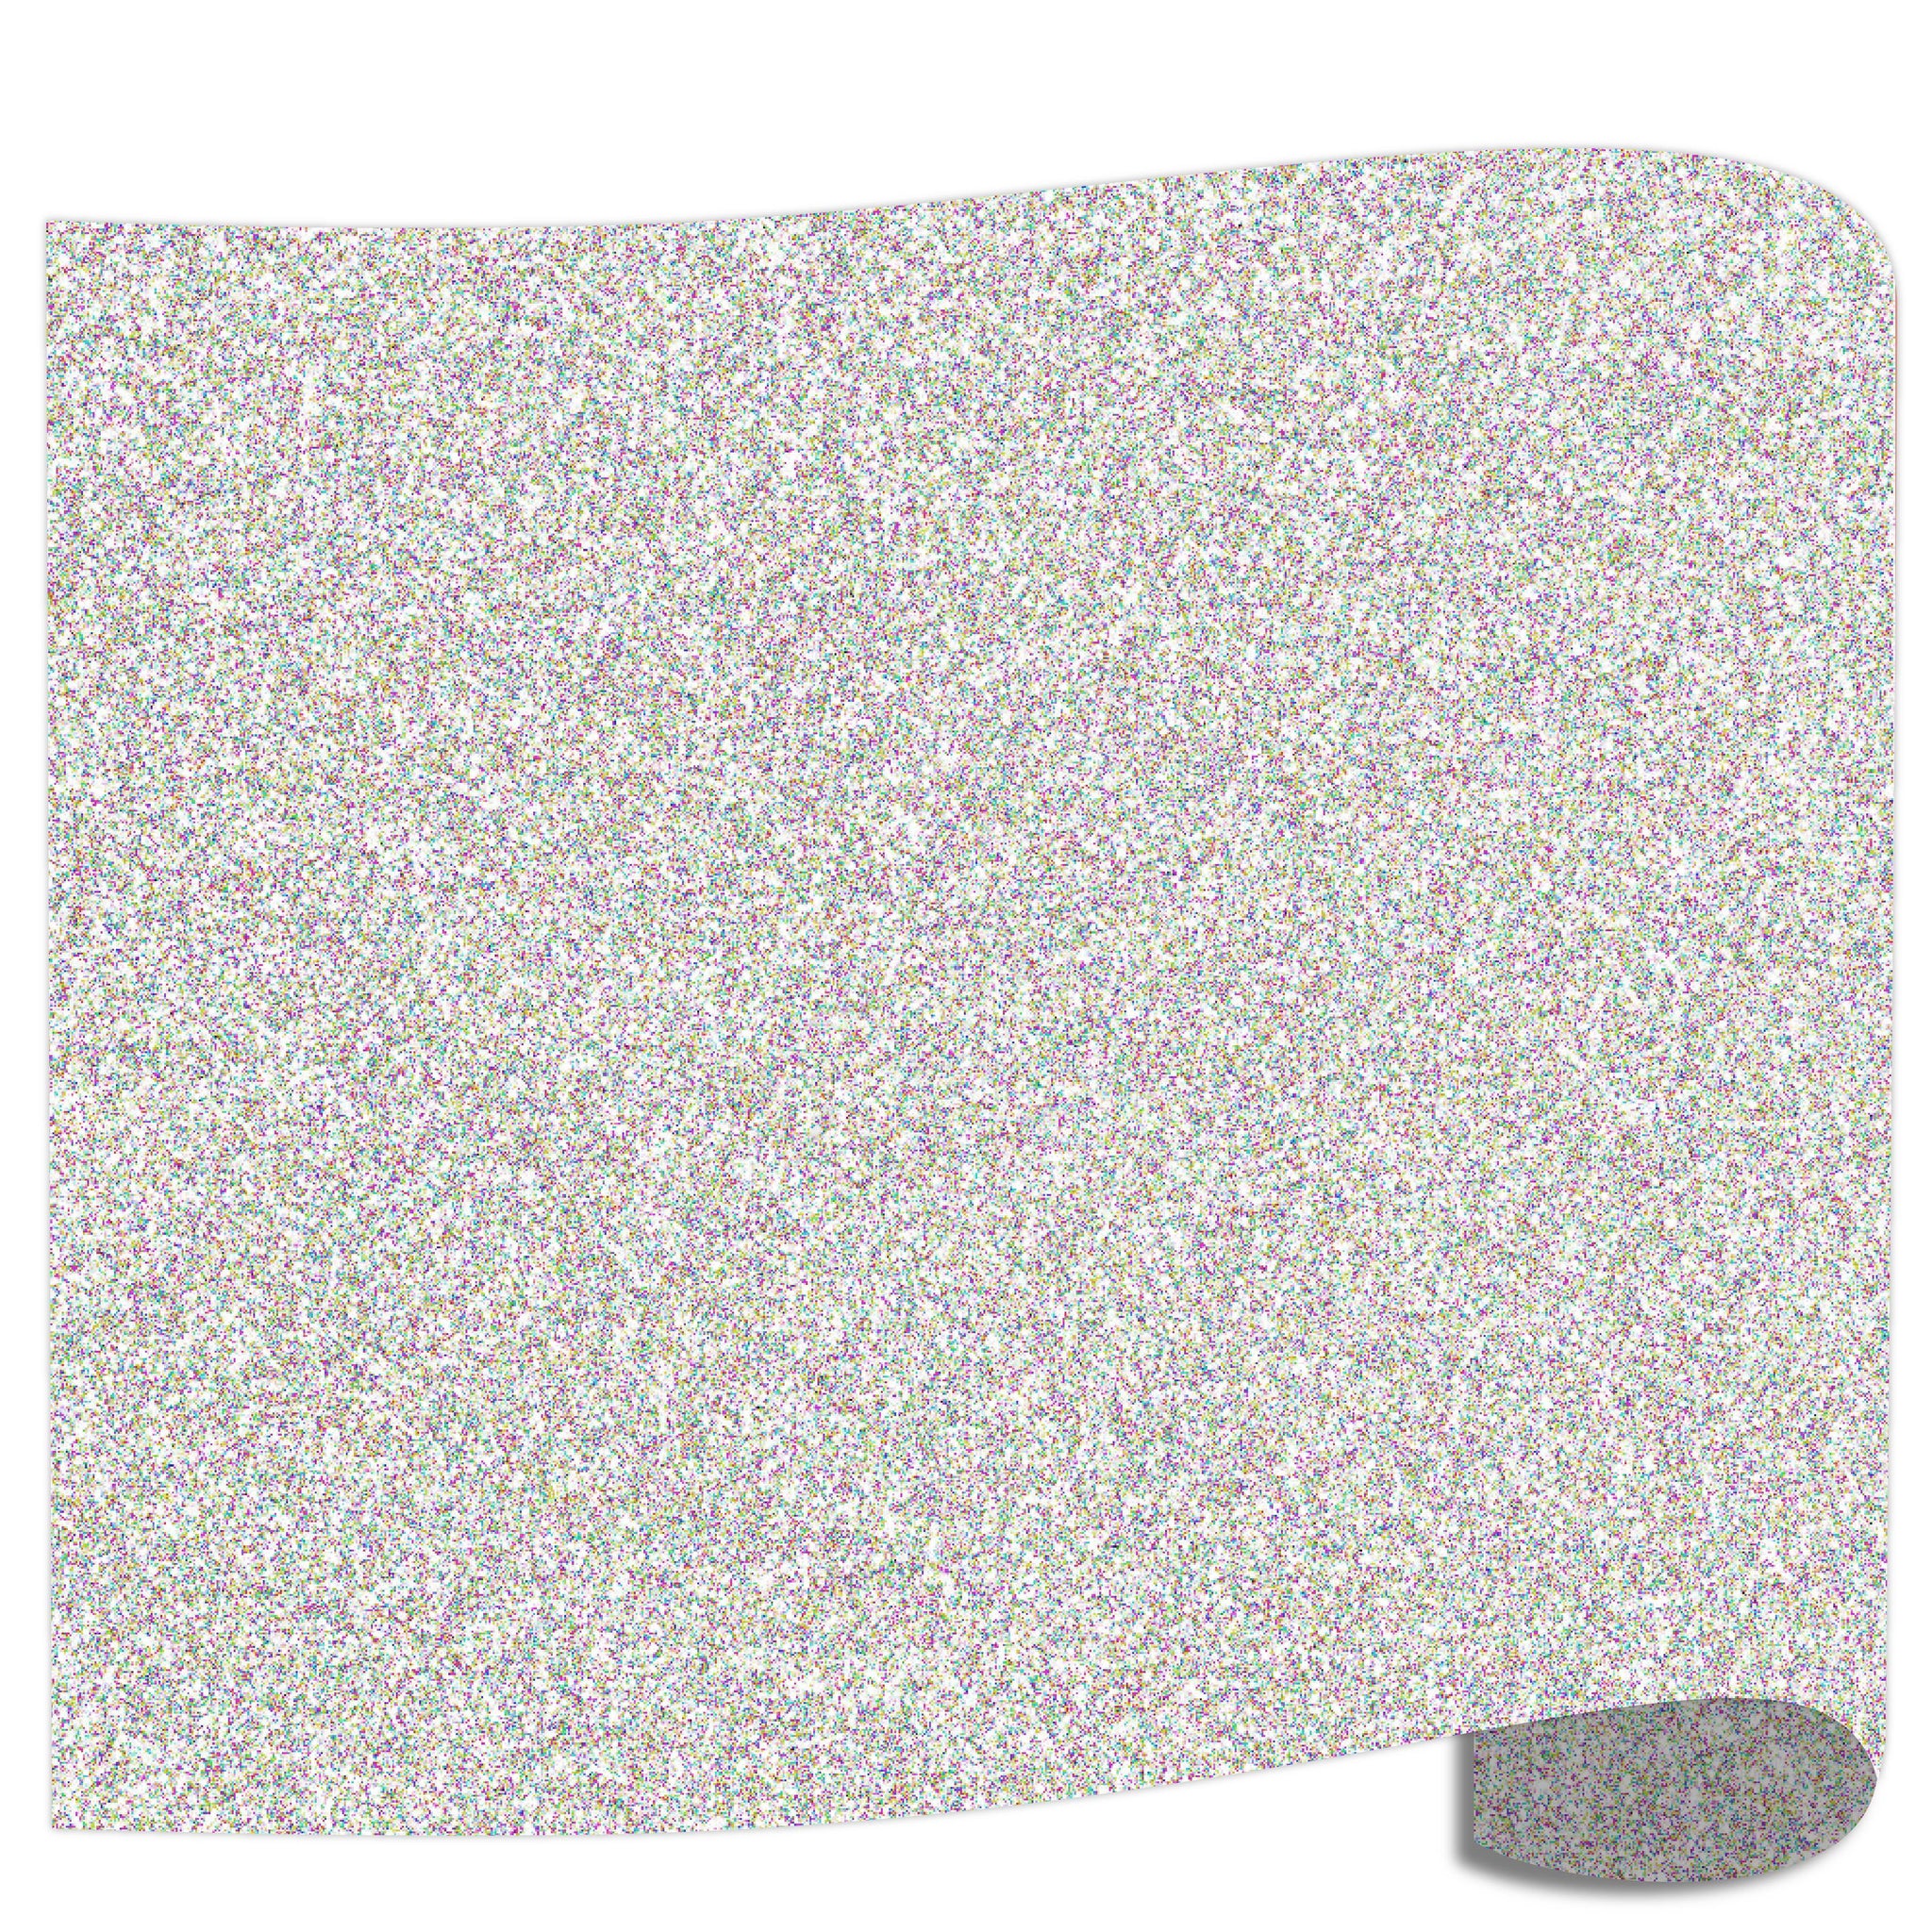 Siser Glitter HTV Iron On Heat Transfer Vinyl 20 x 12 1 Precut Sheet -  Silver Confetti